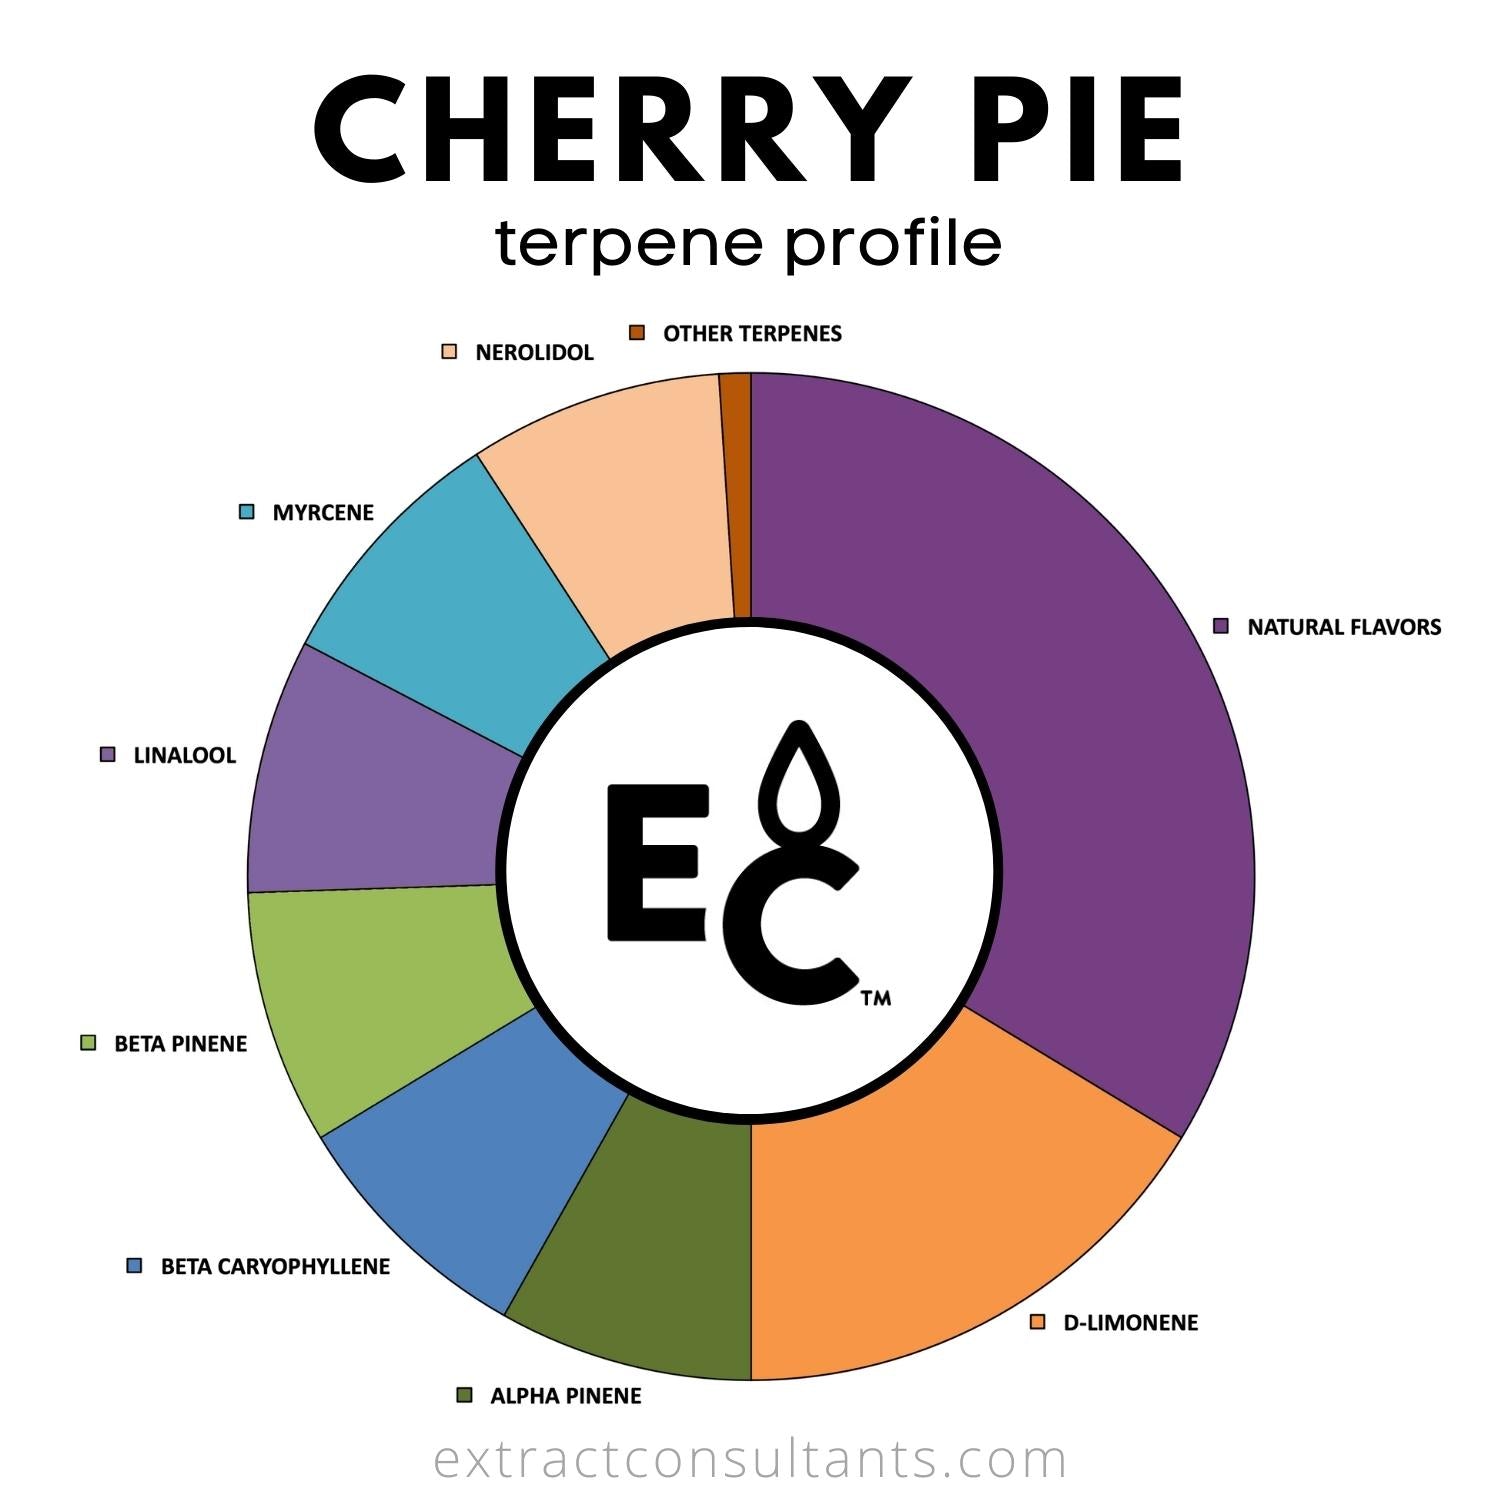 Cherry pie terpene profile chart